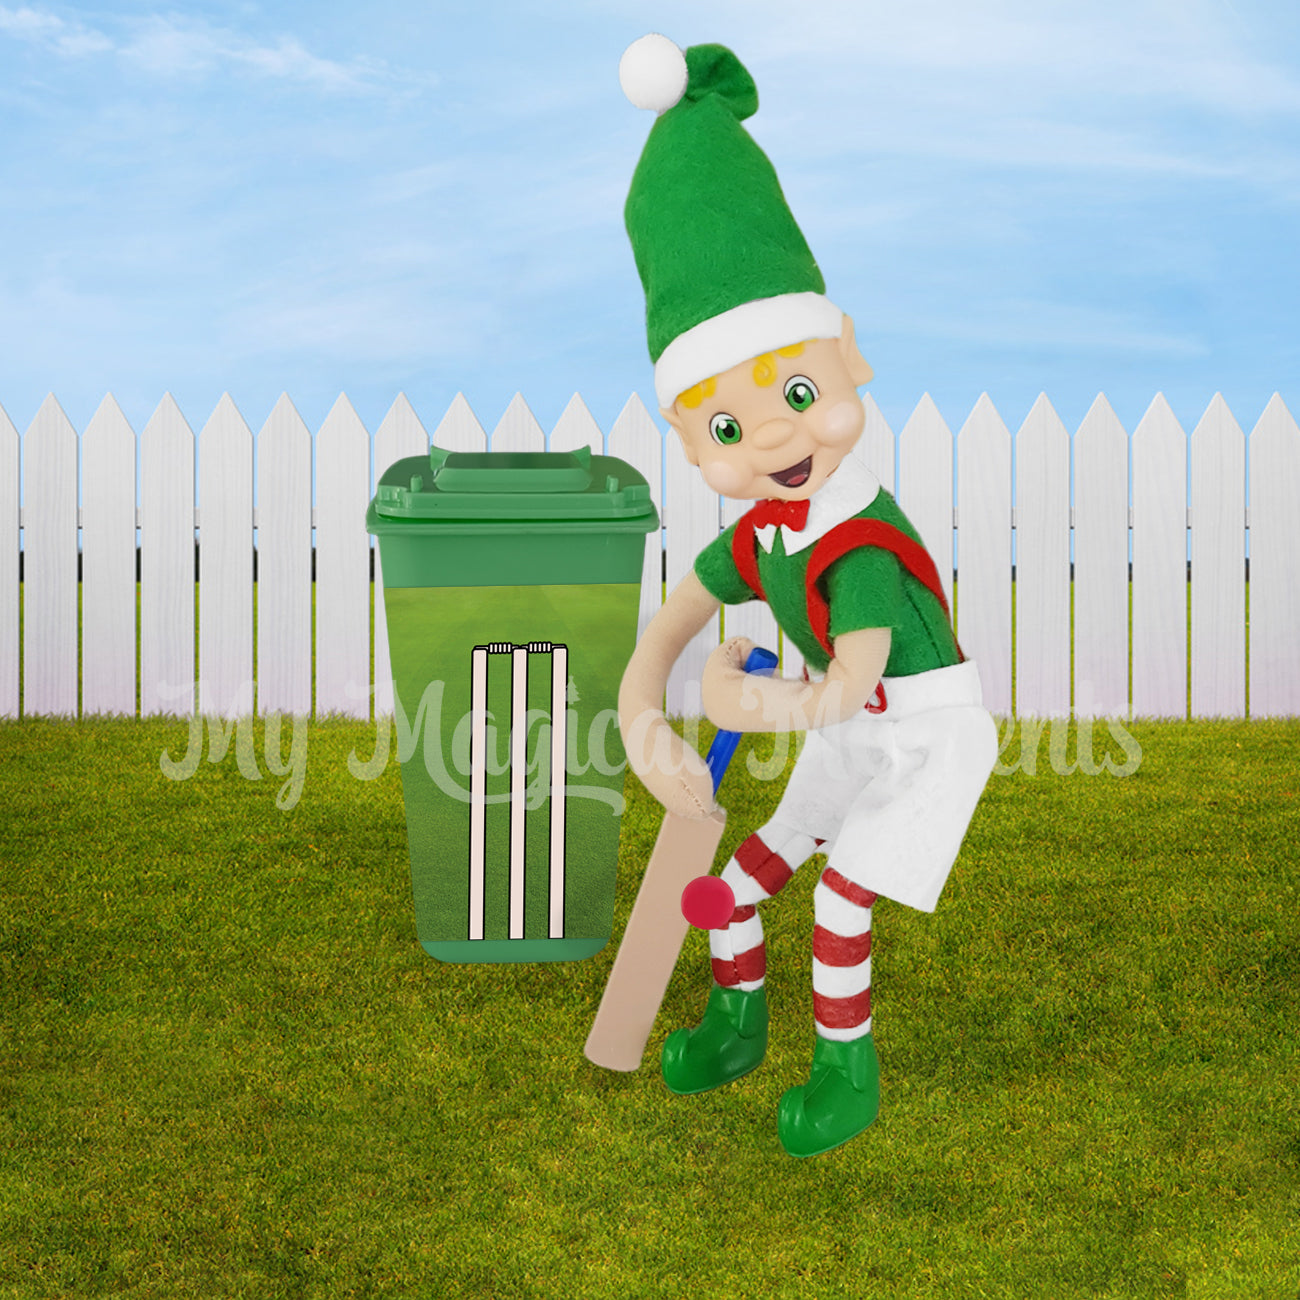 Blonde hair elf playing crickets with a wheelie bin